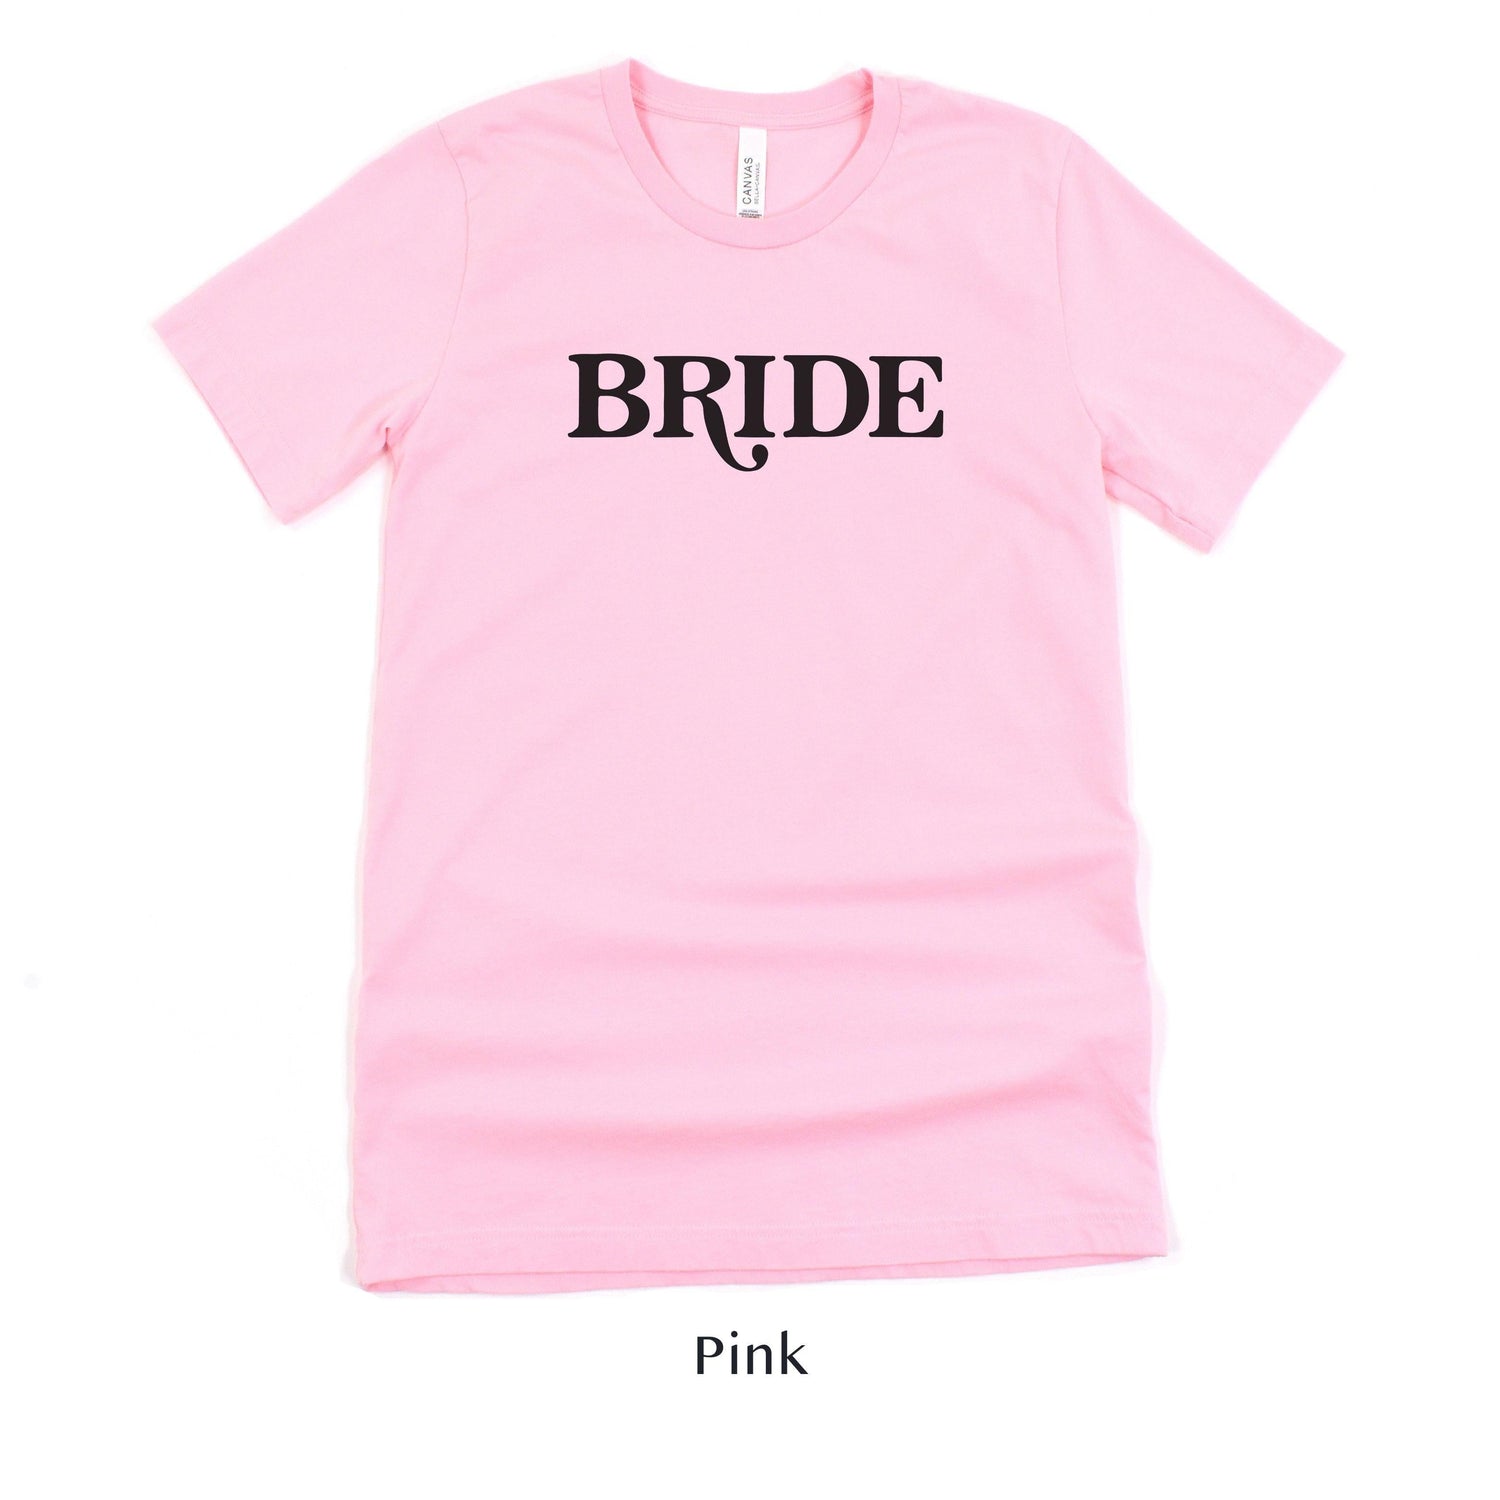 Bride Retro Short-sleeve Tee by Oaklynn Lane - Pink Shirt